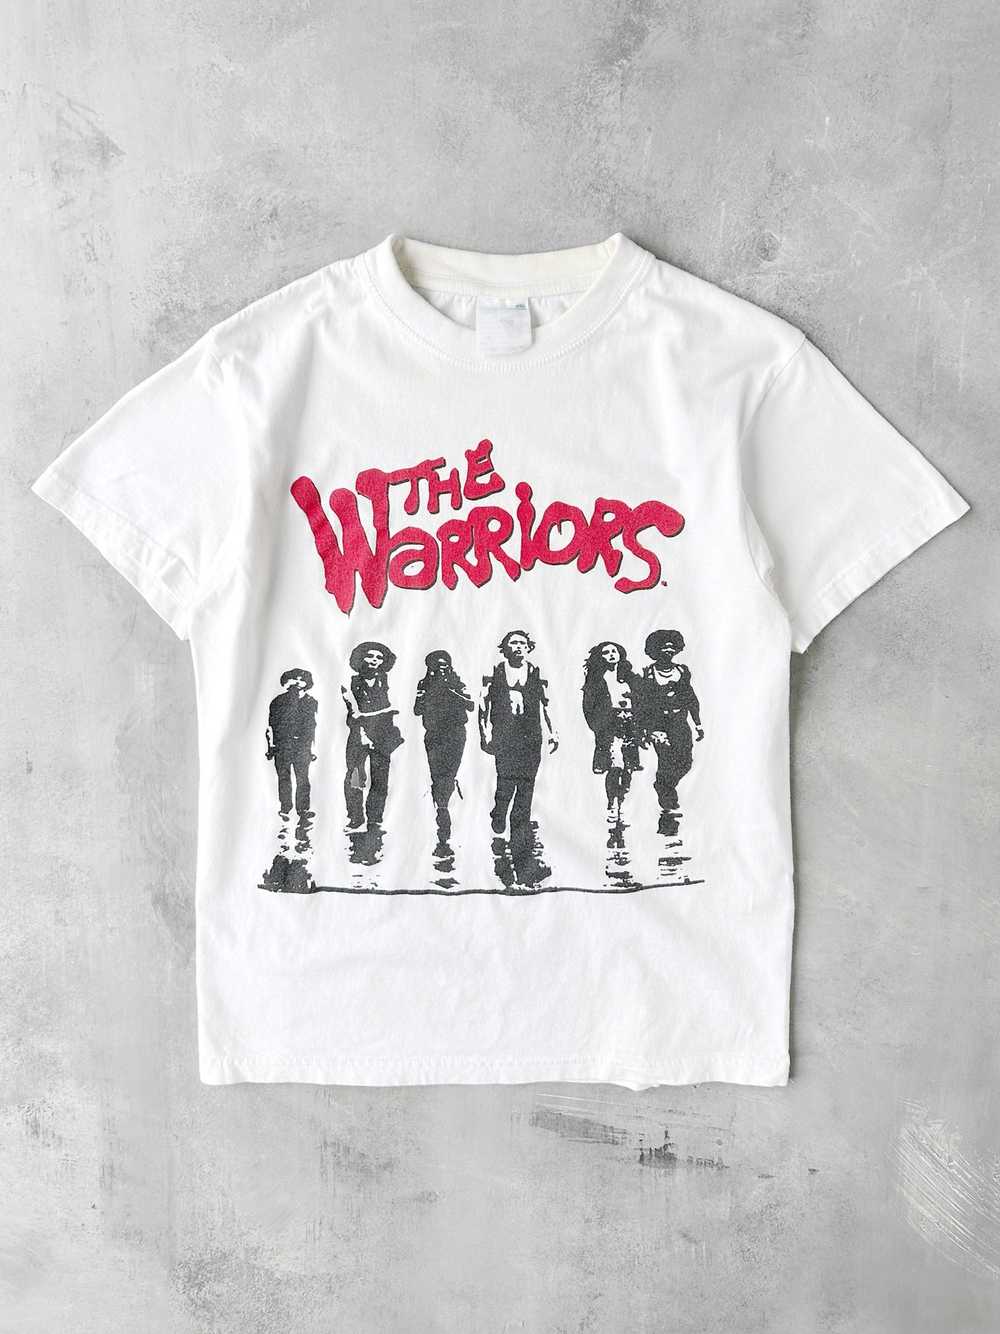 The Warriors T-Shirt 00's - Small / Medium - image 1